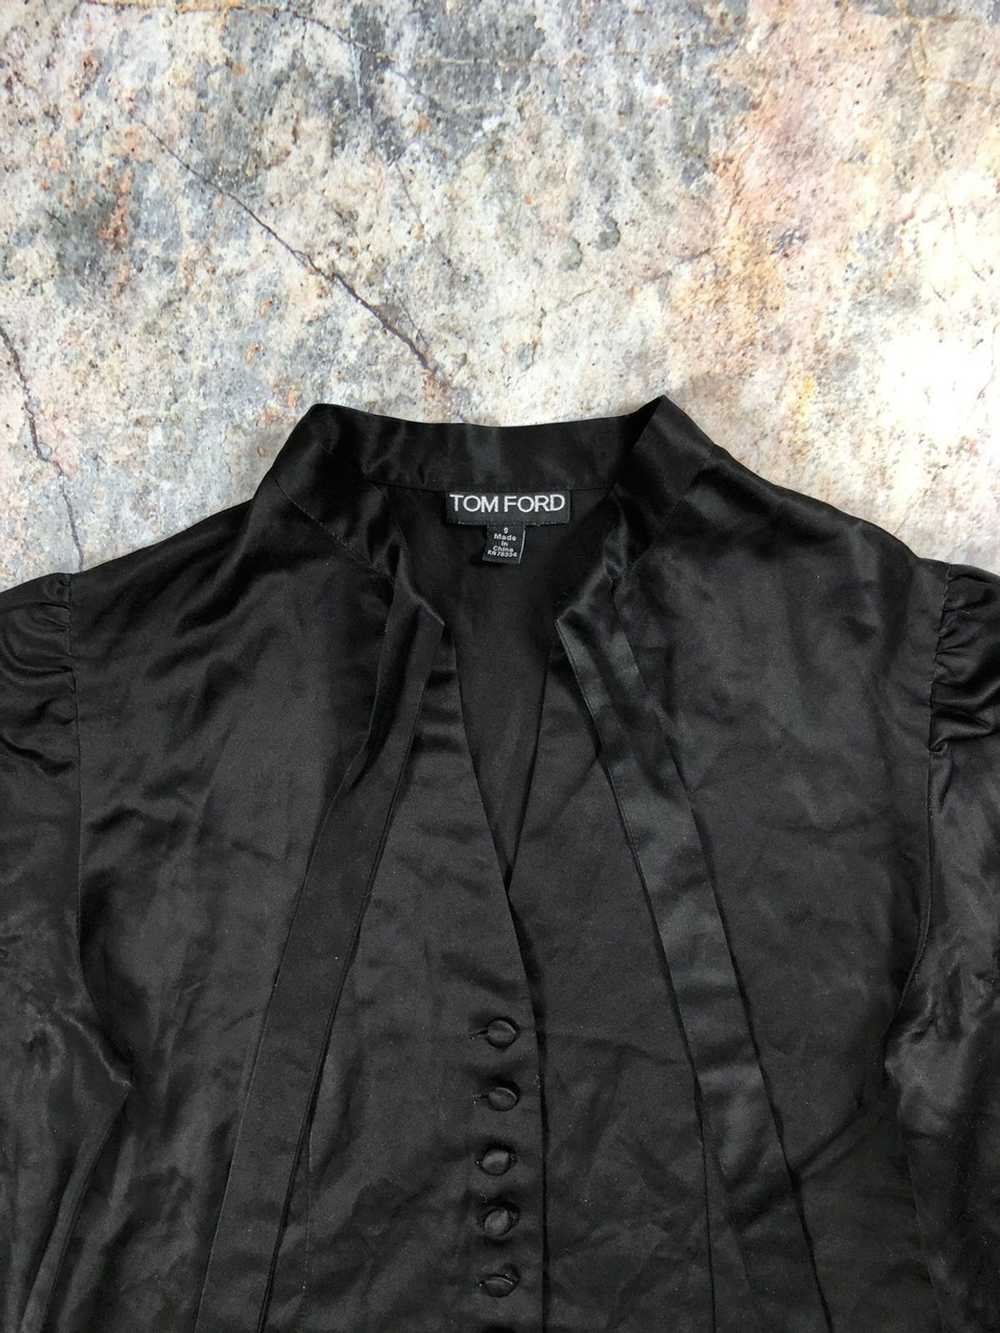 Tom Ford Tom ford black blazer jacket - image 2